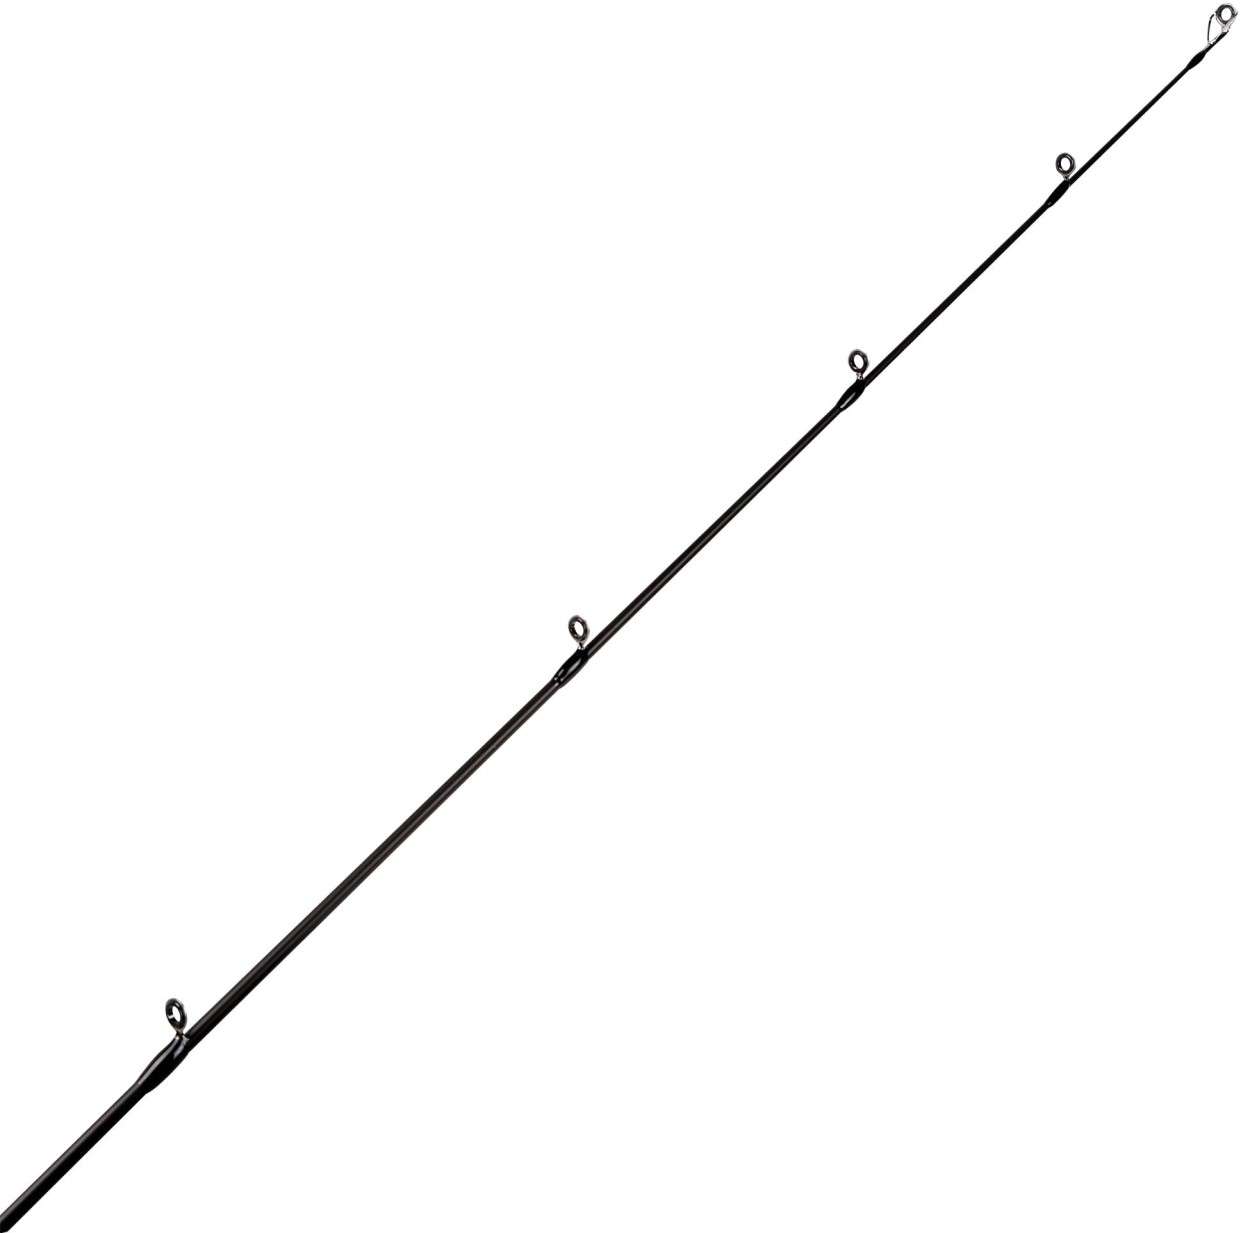 Okuma Celilo inchB inch Casting Salmon Rods - TackleDirect